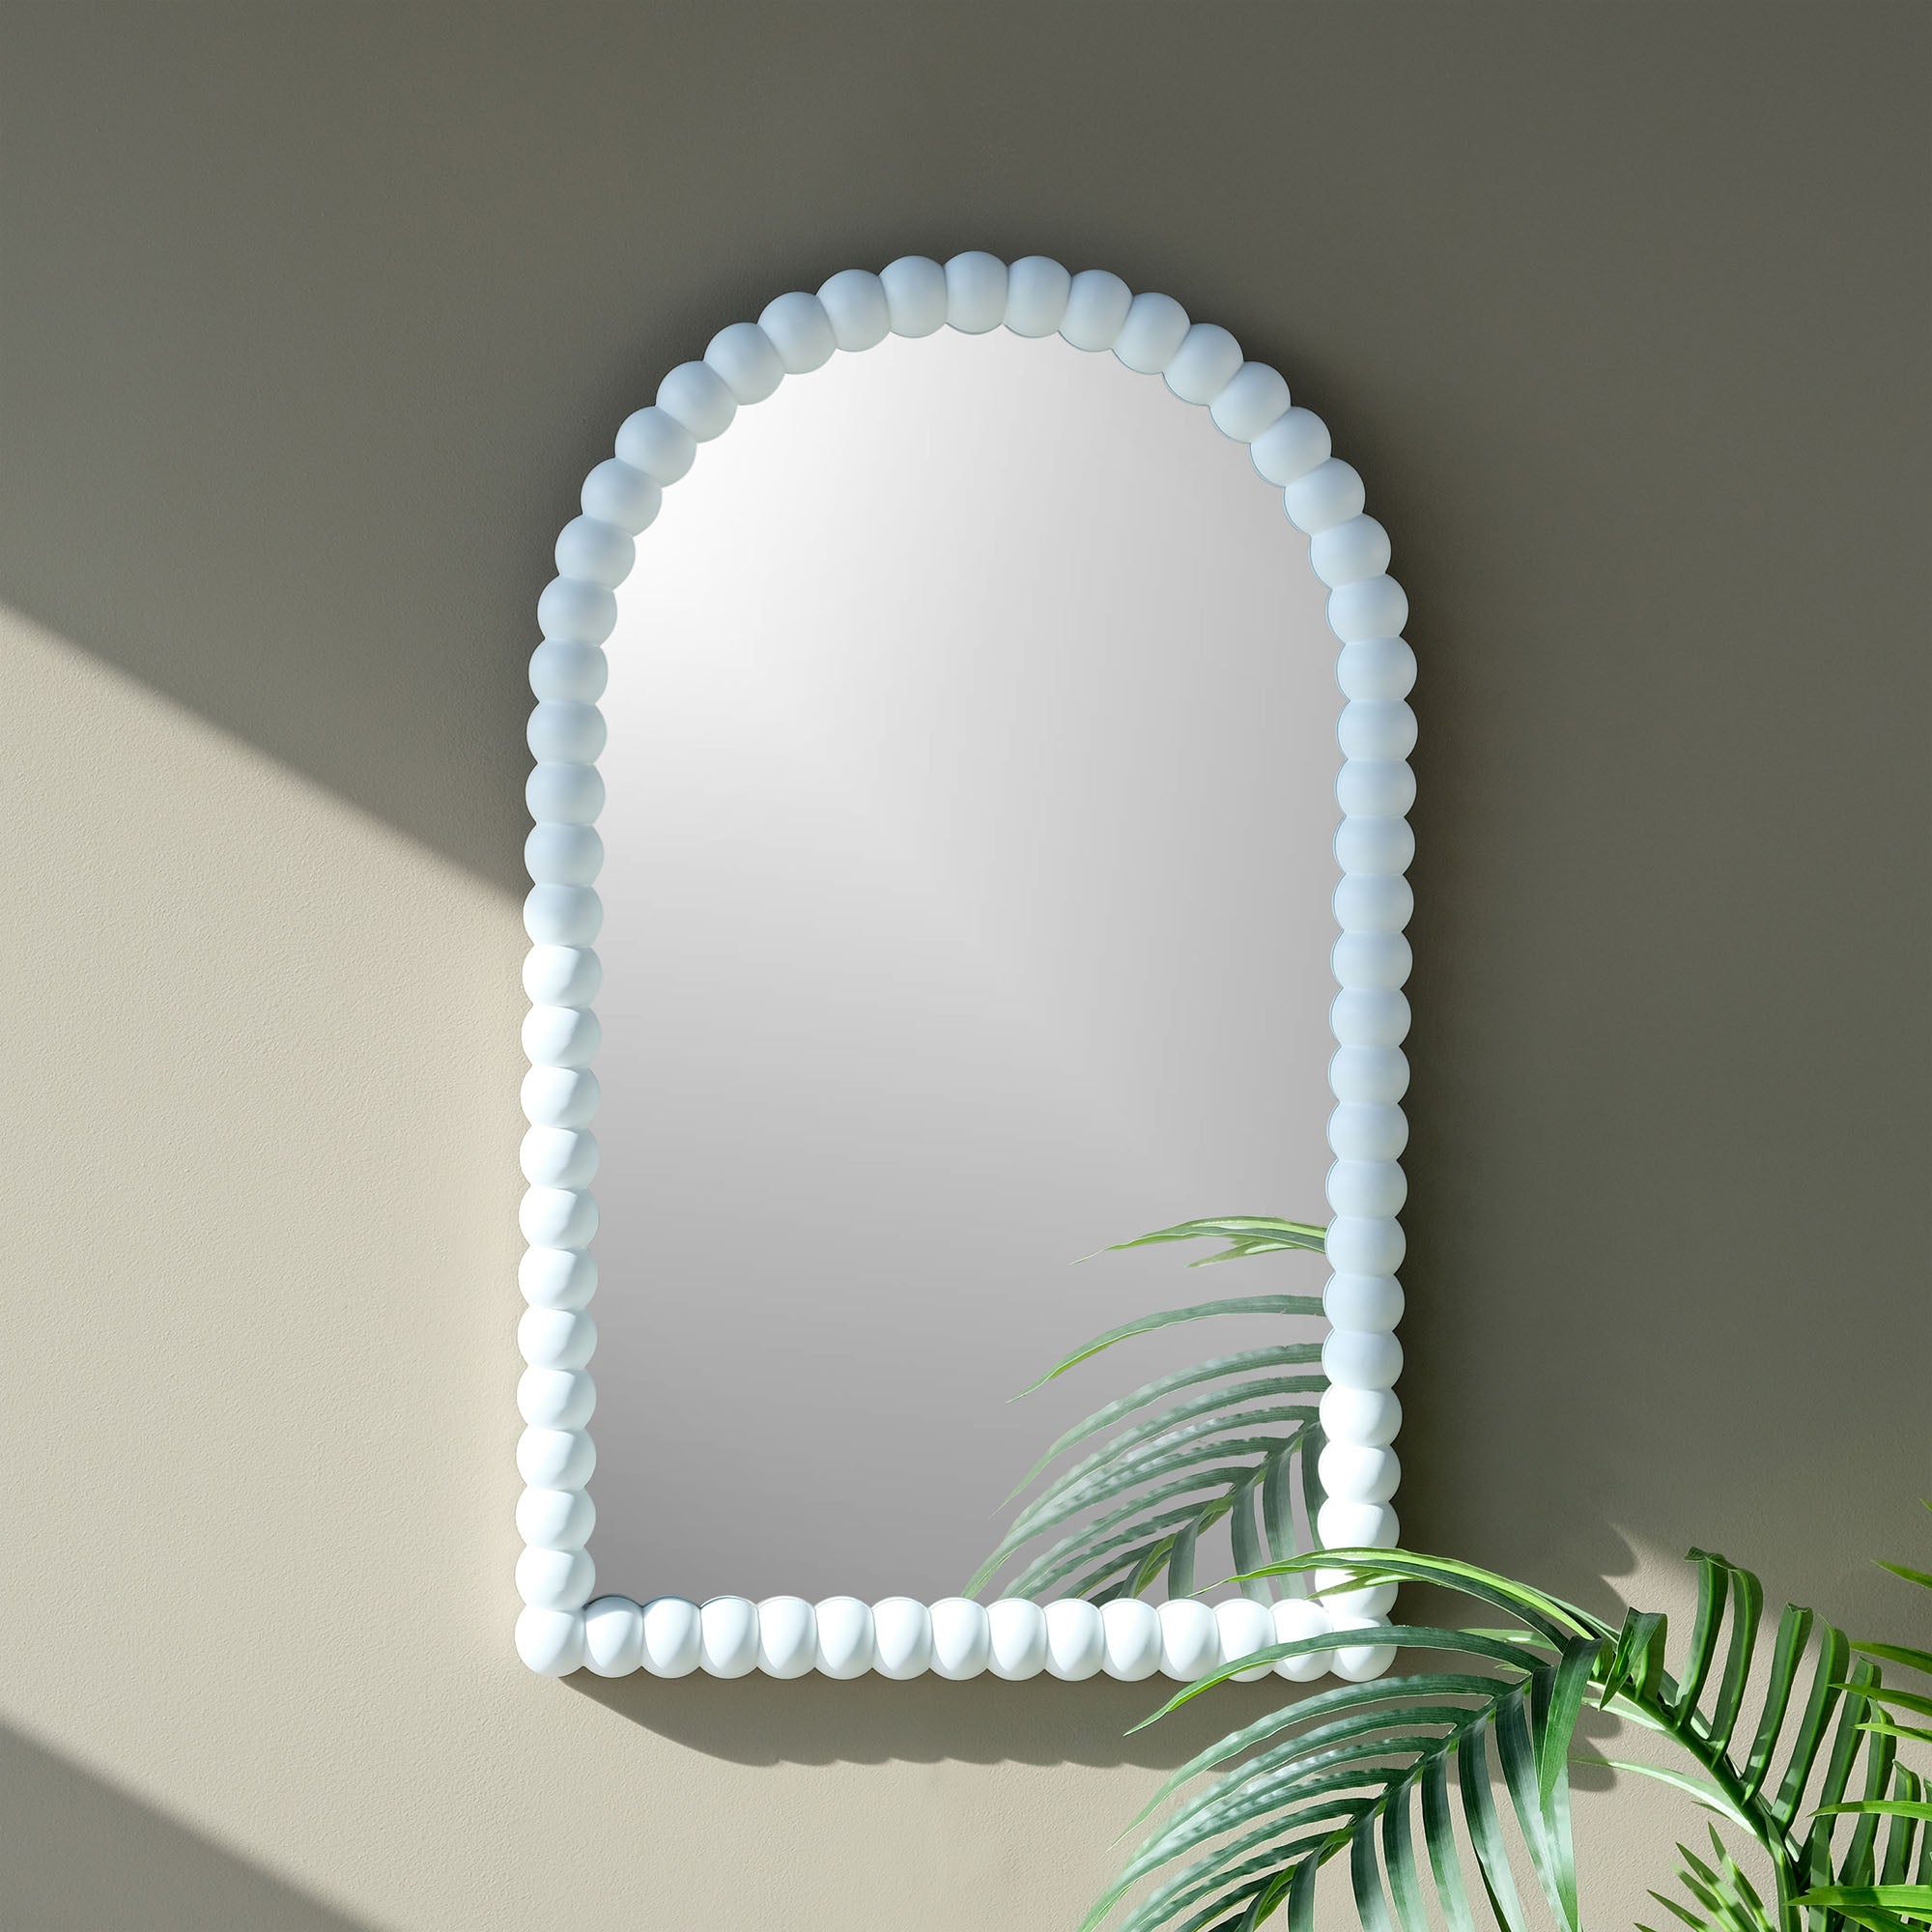 White wash ball frame arch mirror